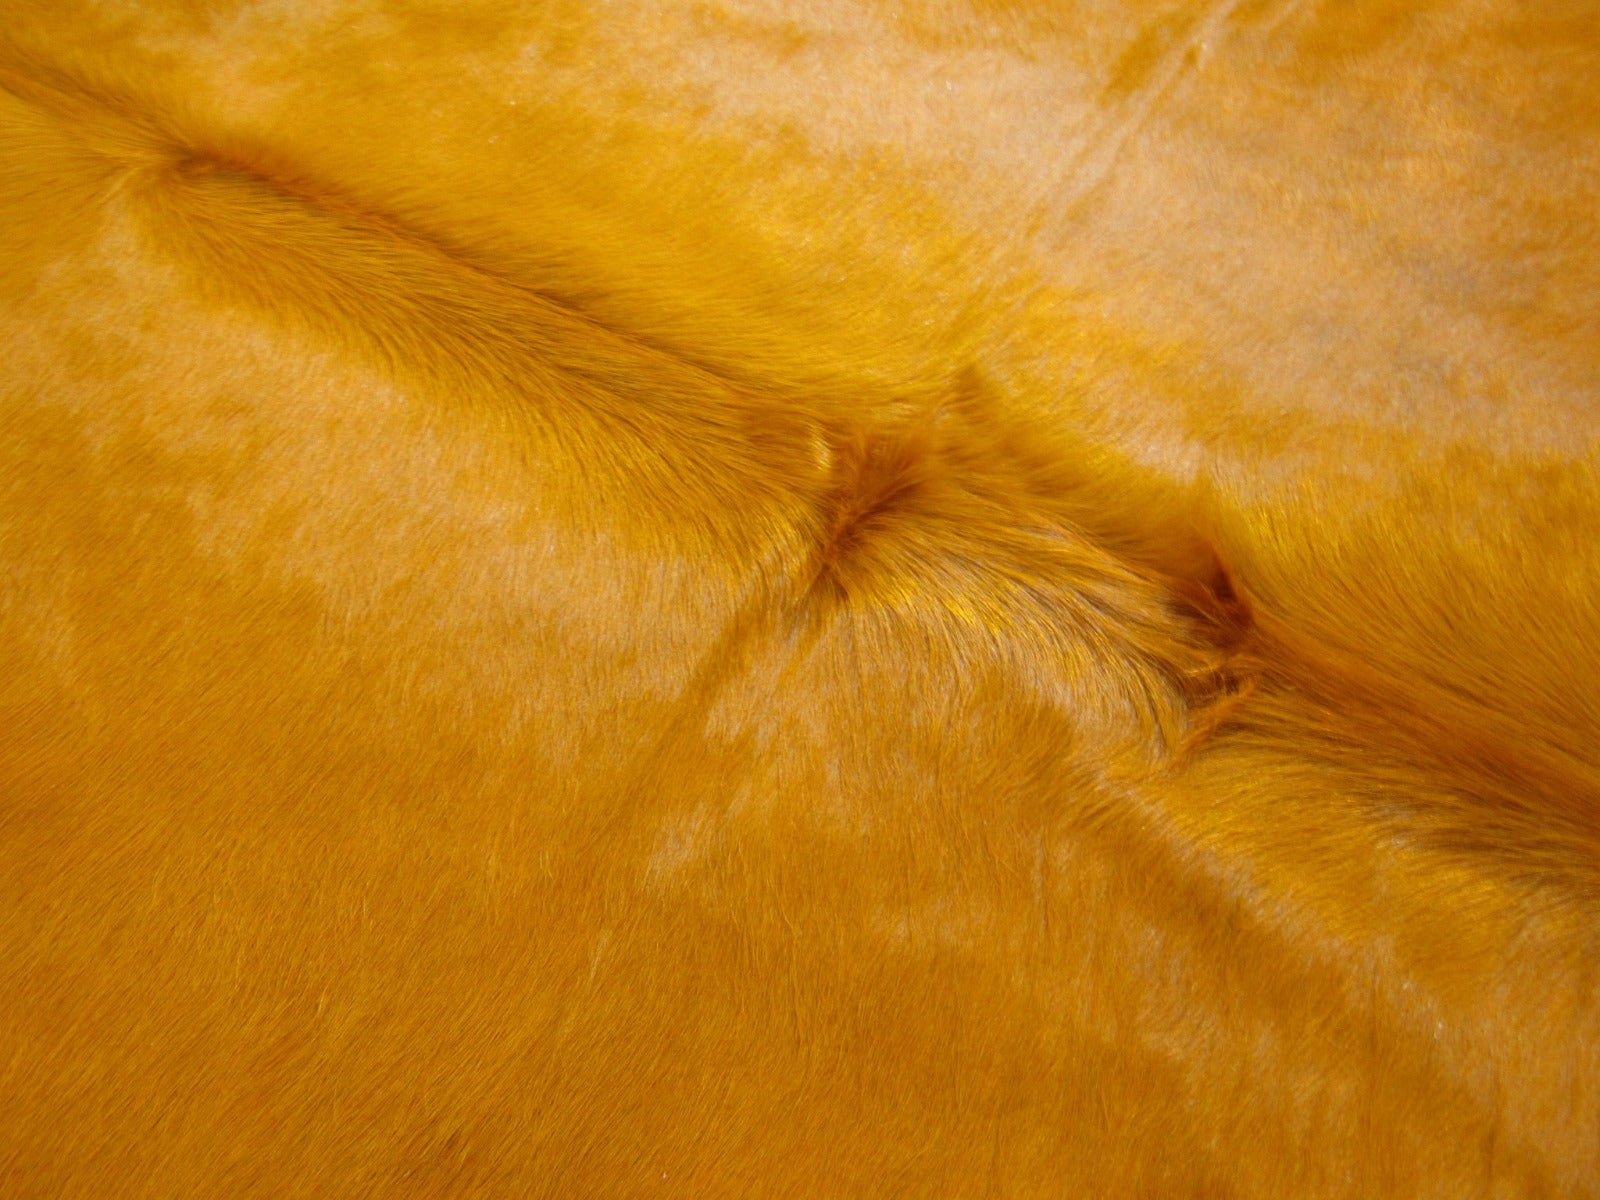 Dyed Orange Cowhide Rug - Size: 7x6 feet C-1747